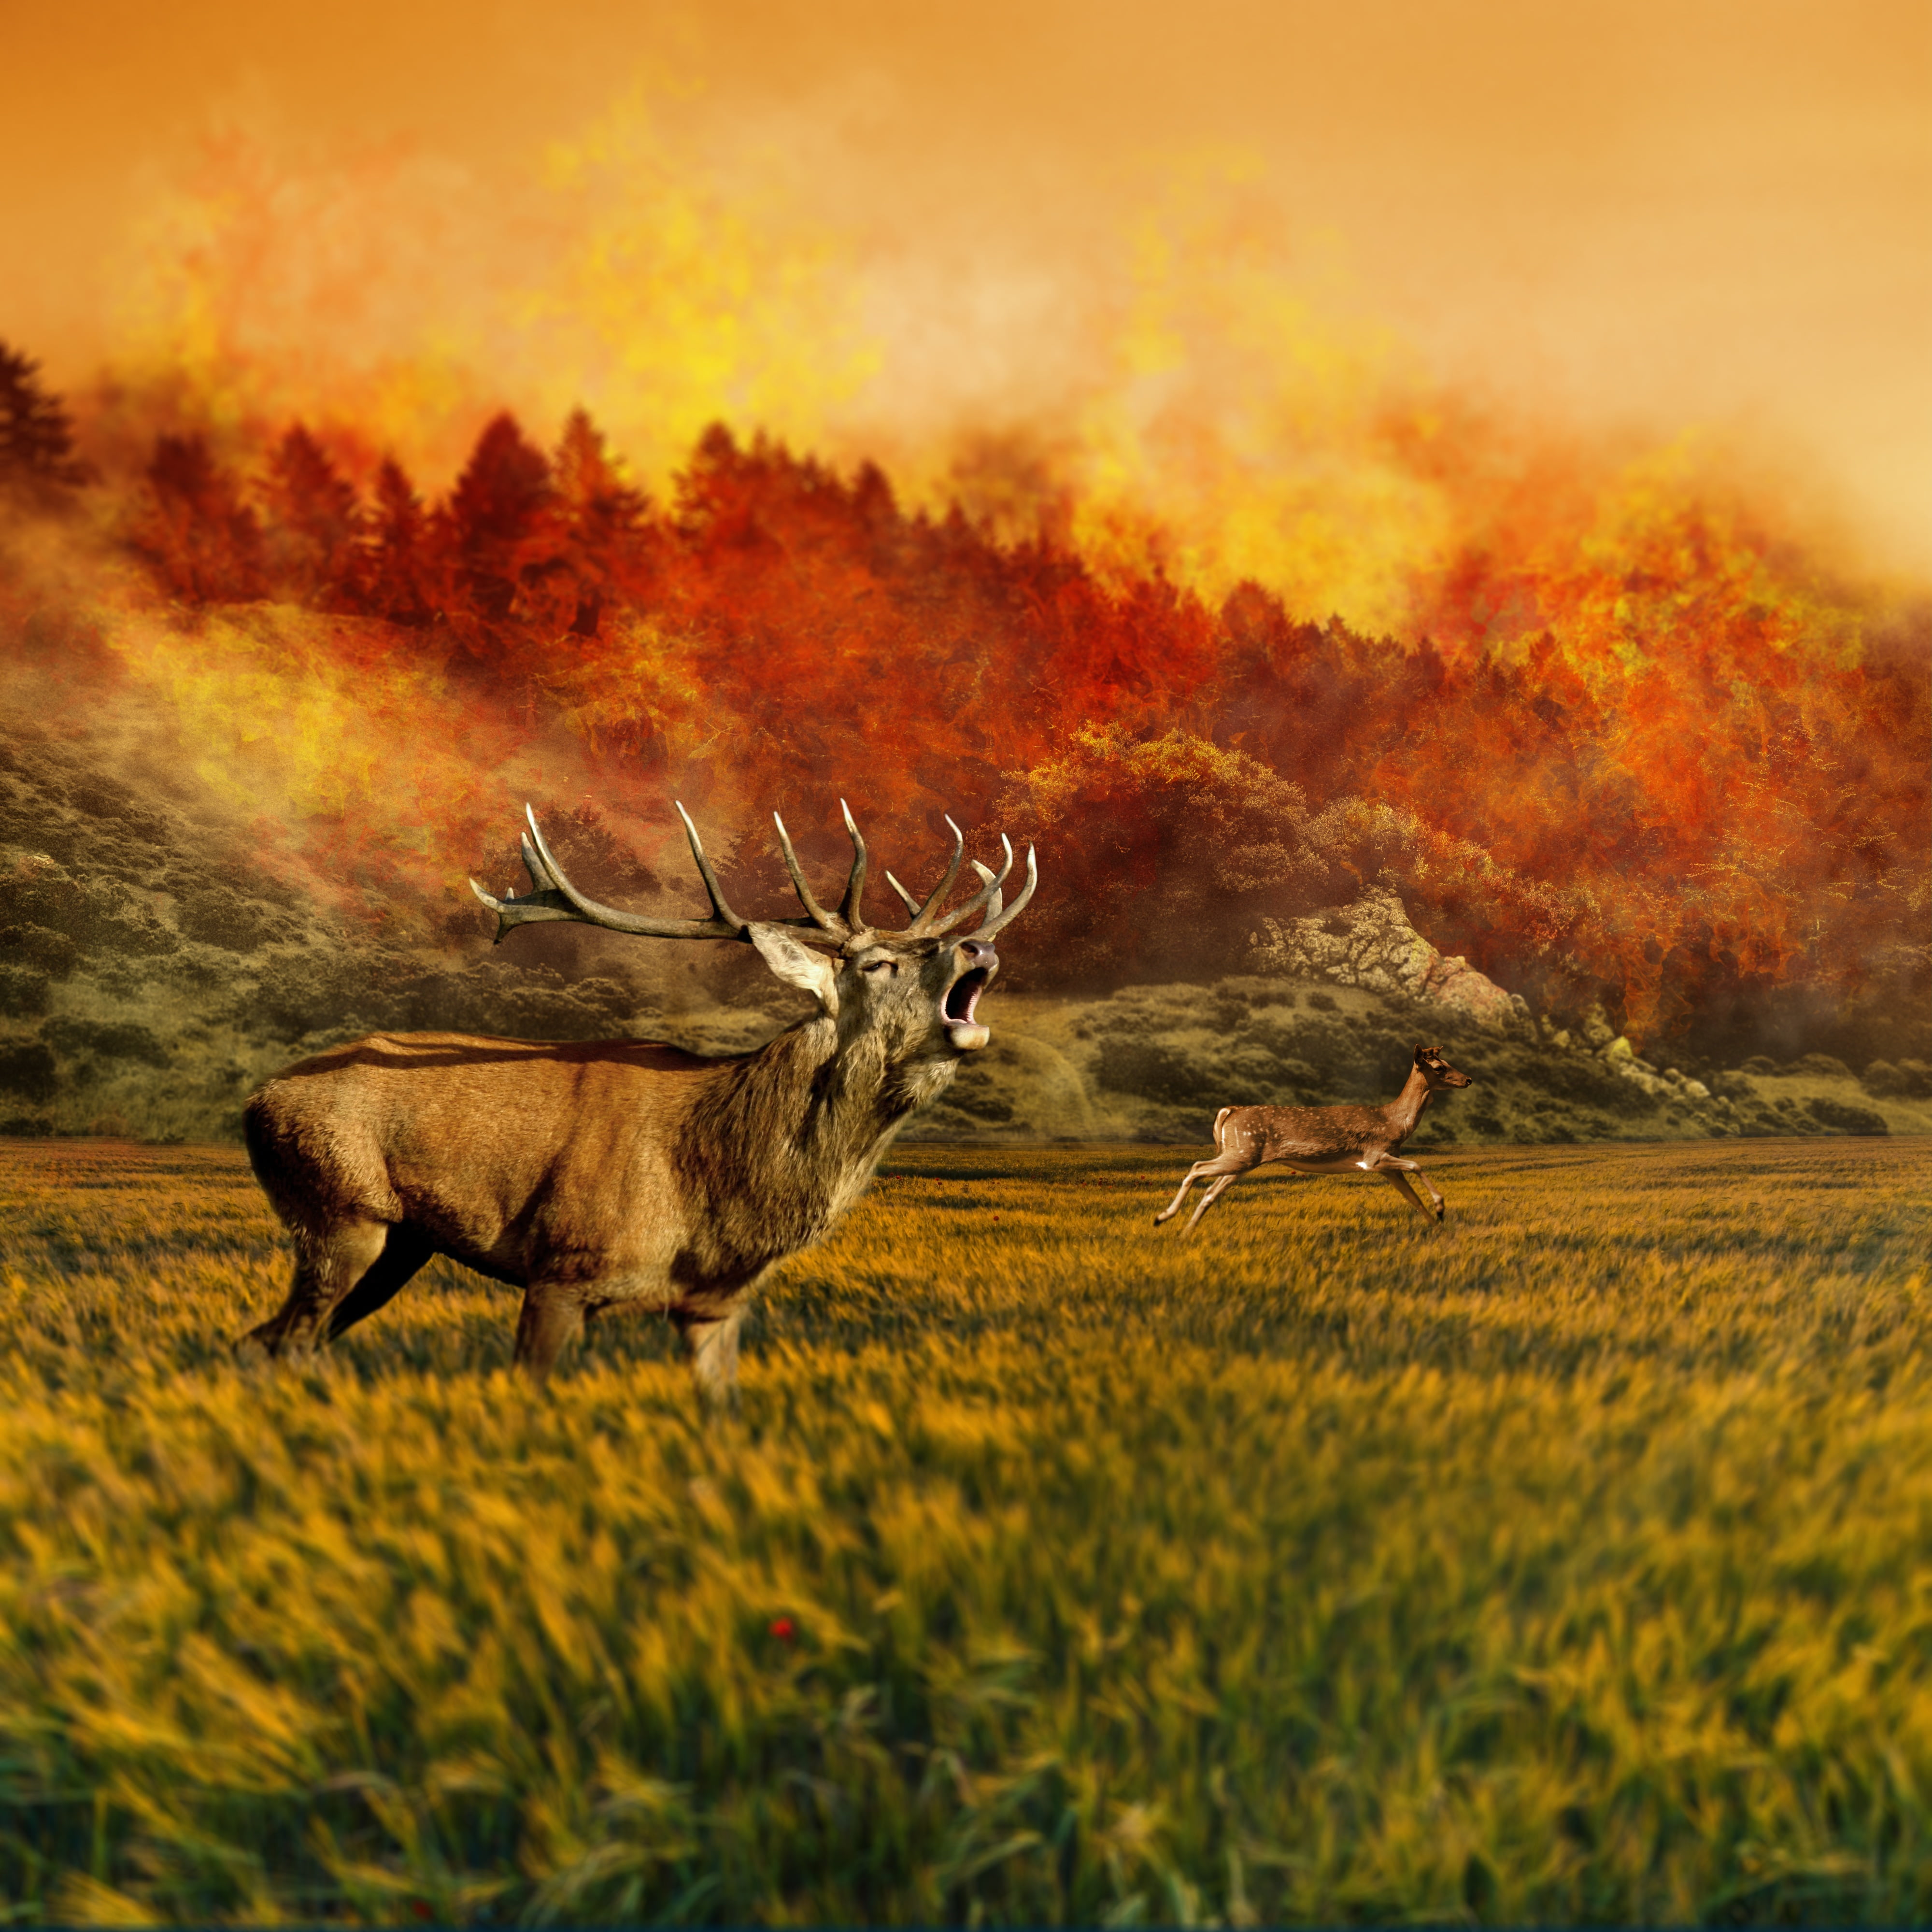 Nature is wild. Пожар в лесу животные. Животные бегут от пожара. Олень в лесу. Животные бегут из леса.